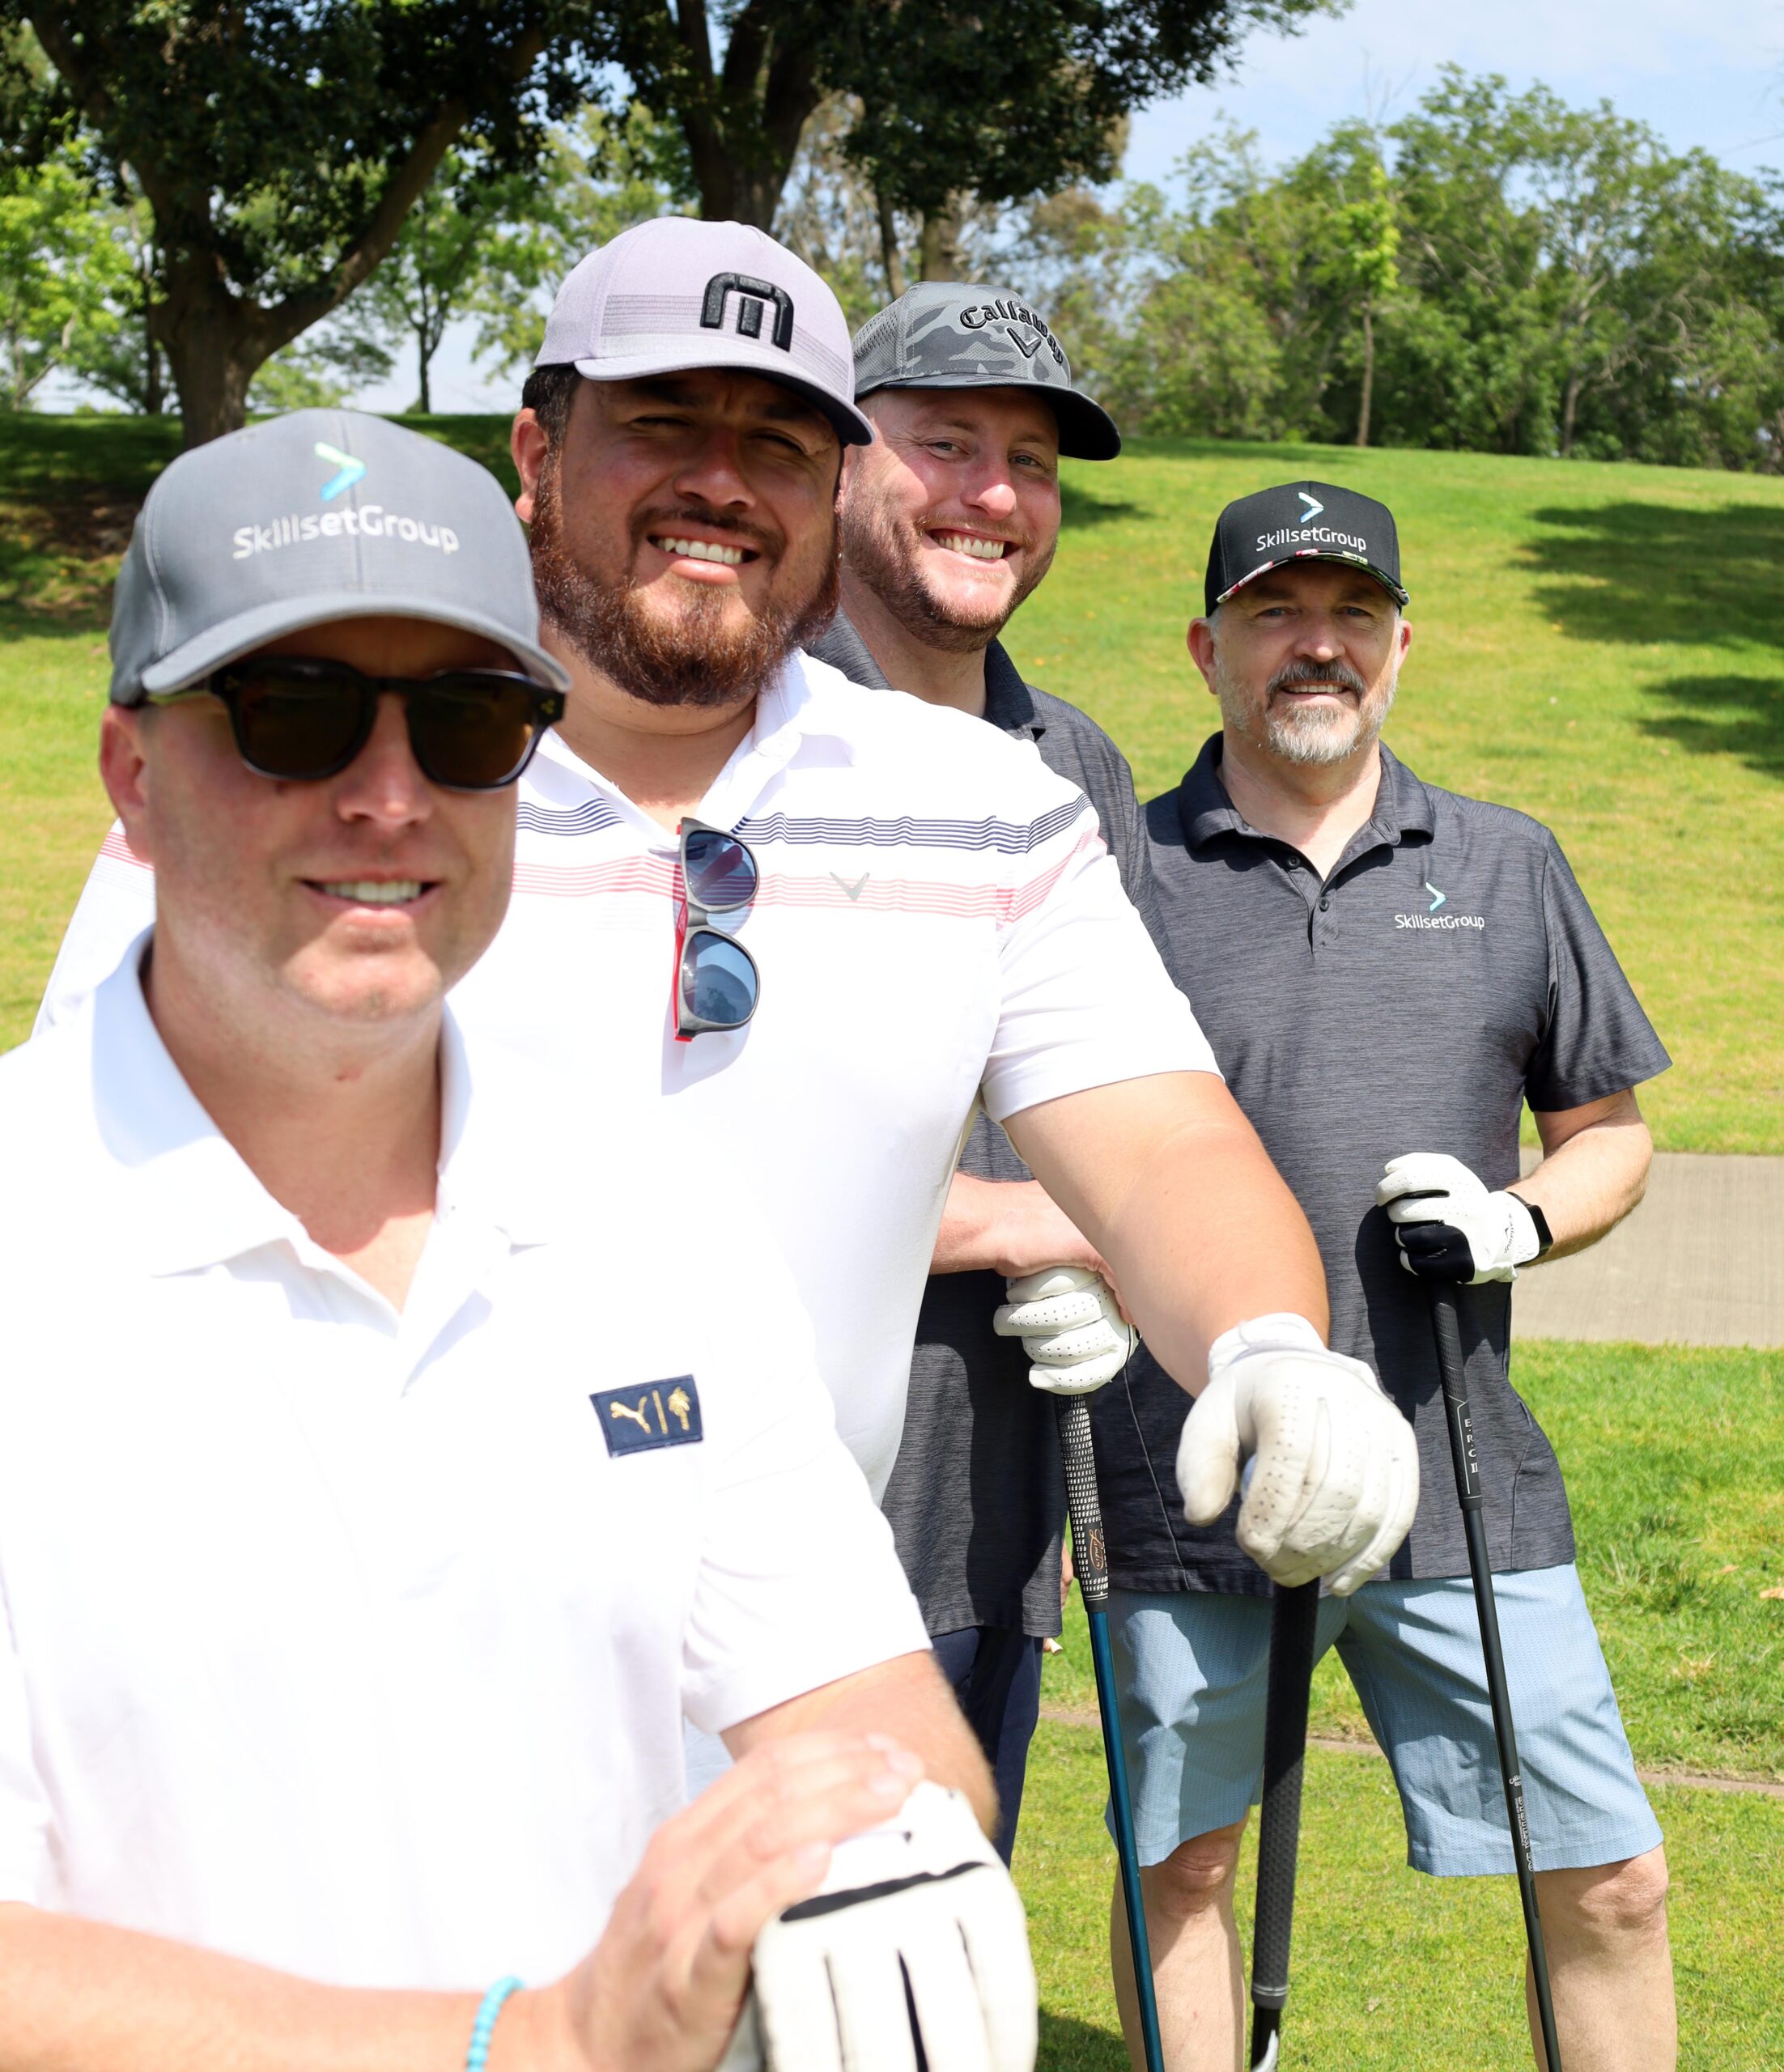 SkillsetGroup leadership at Paramount COC's charity golf tournament